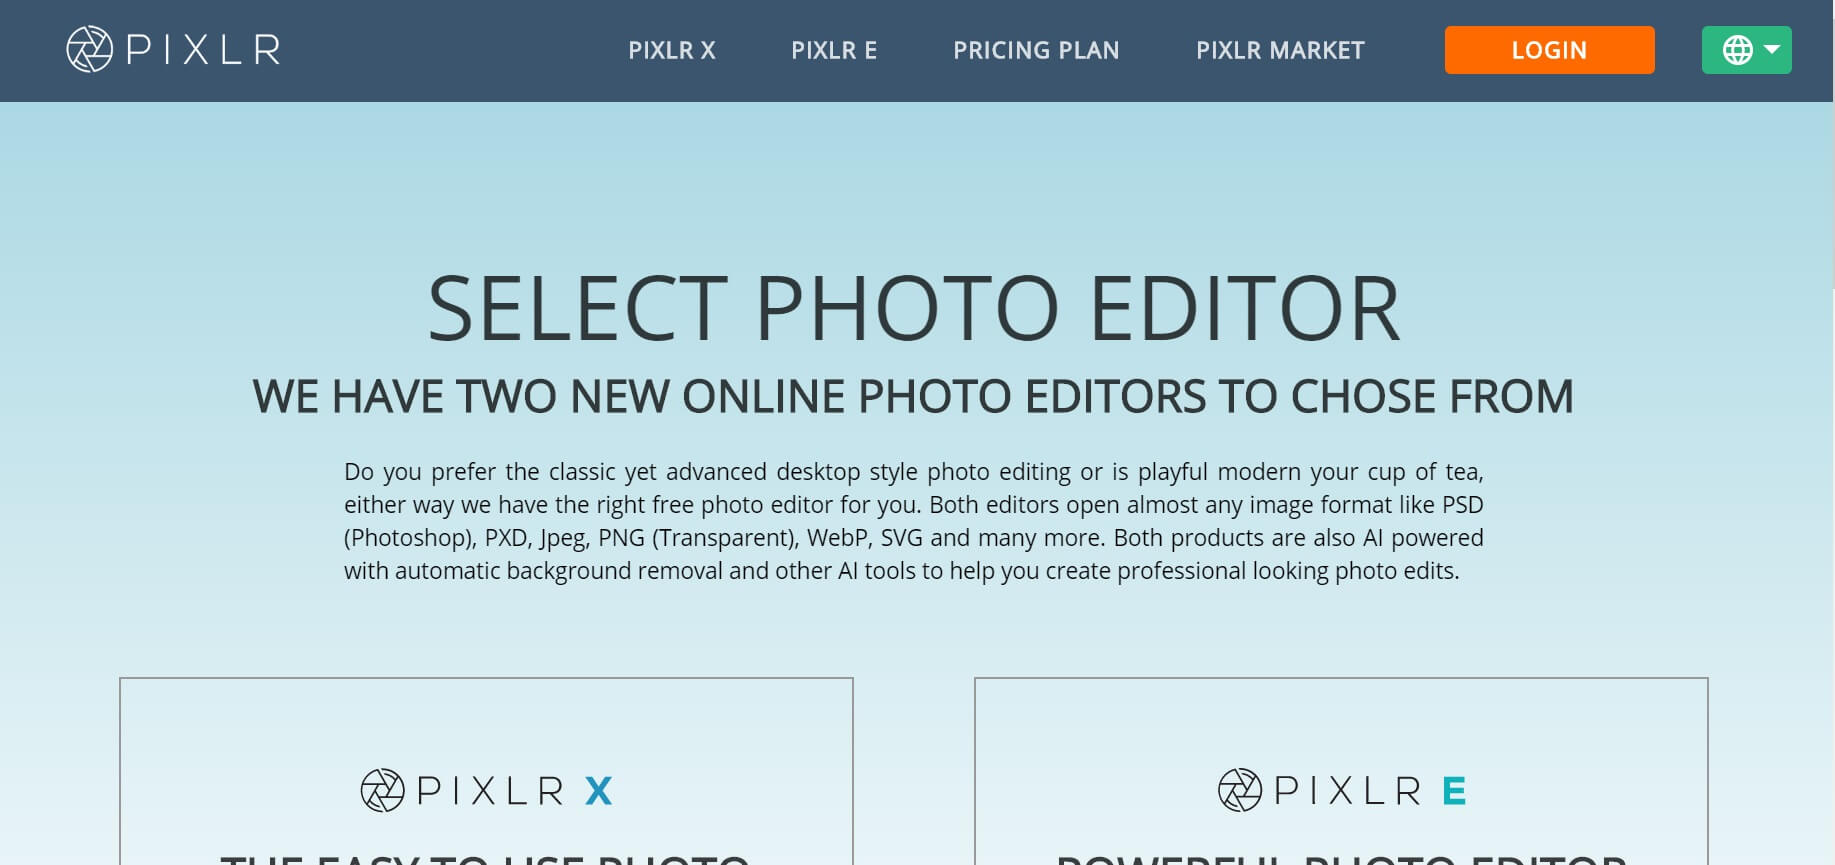 Pixlr photo editing software